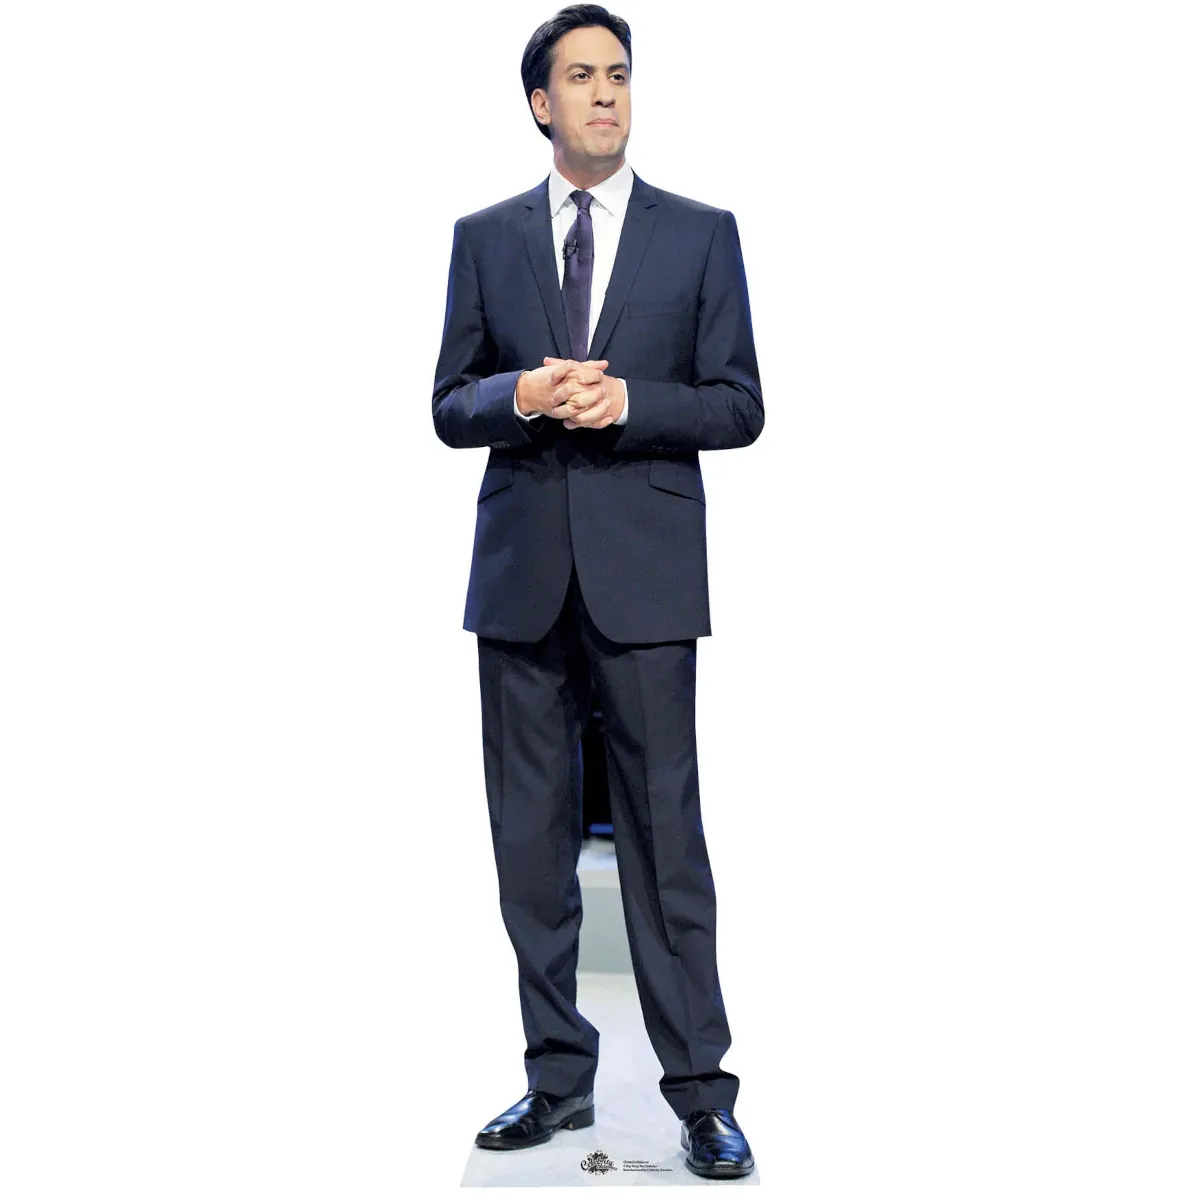 CS598 Ed Miliband (British Politician) Lifesize Cardboard Cutout Standee Front